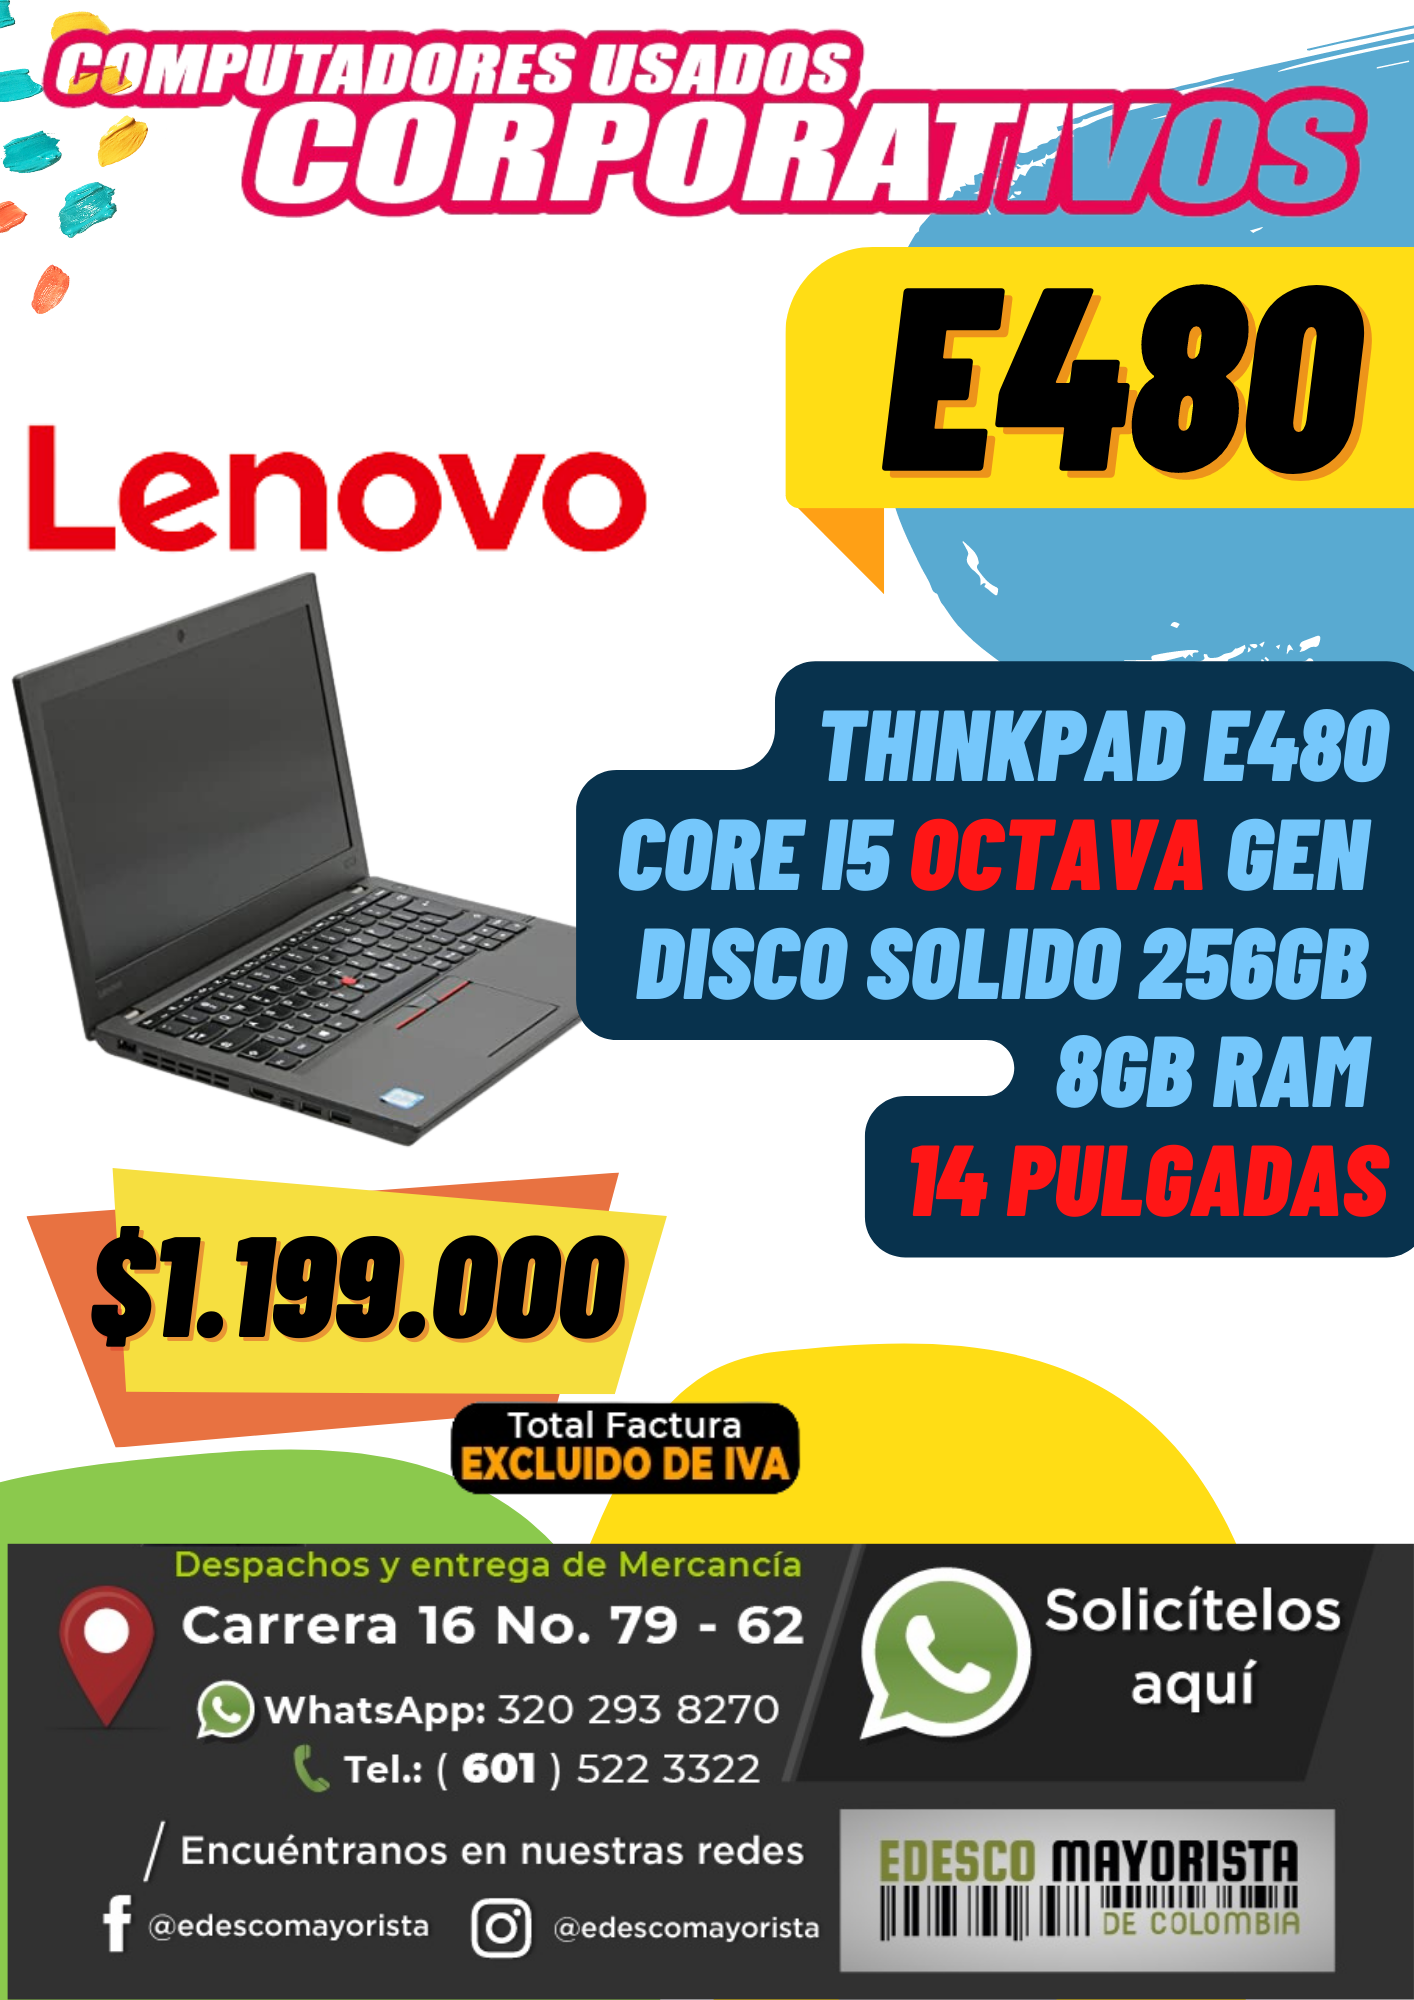 Lenovo E480 Core i5